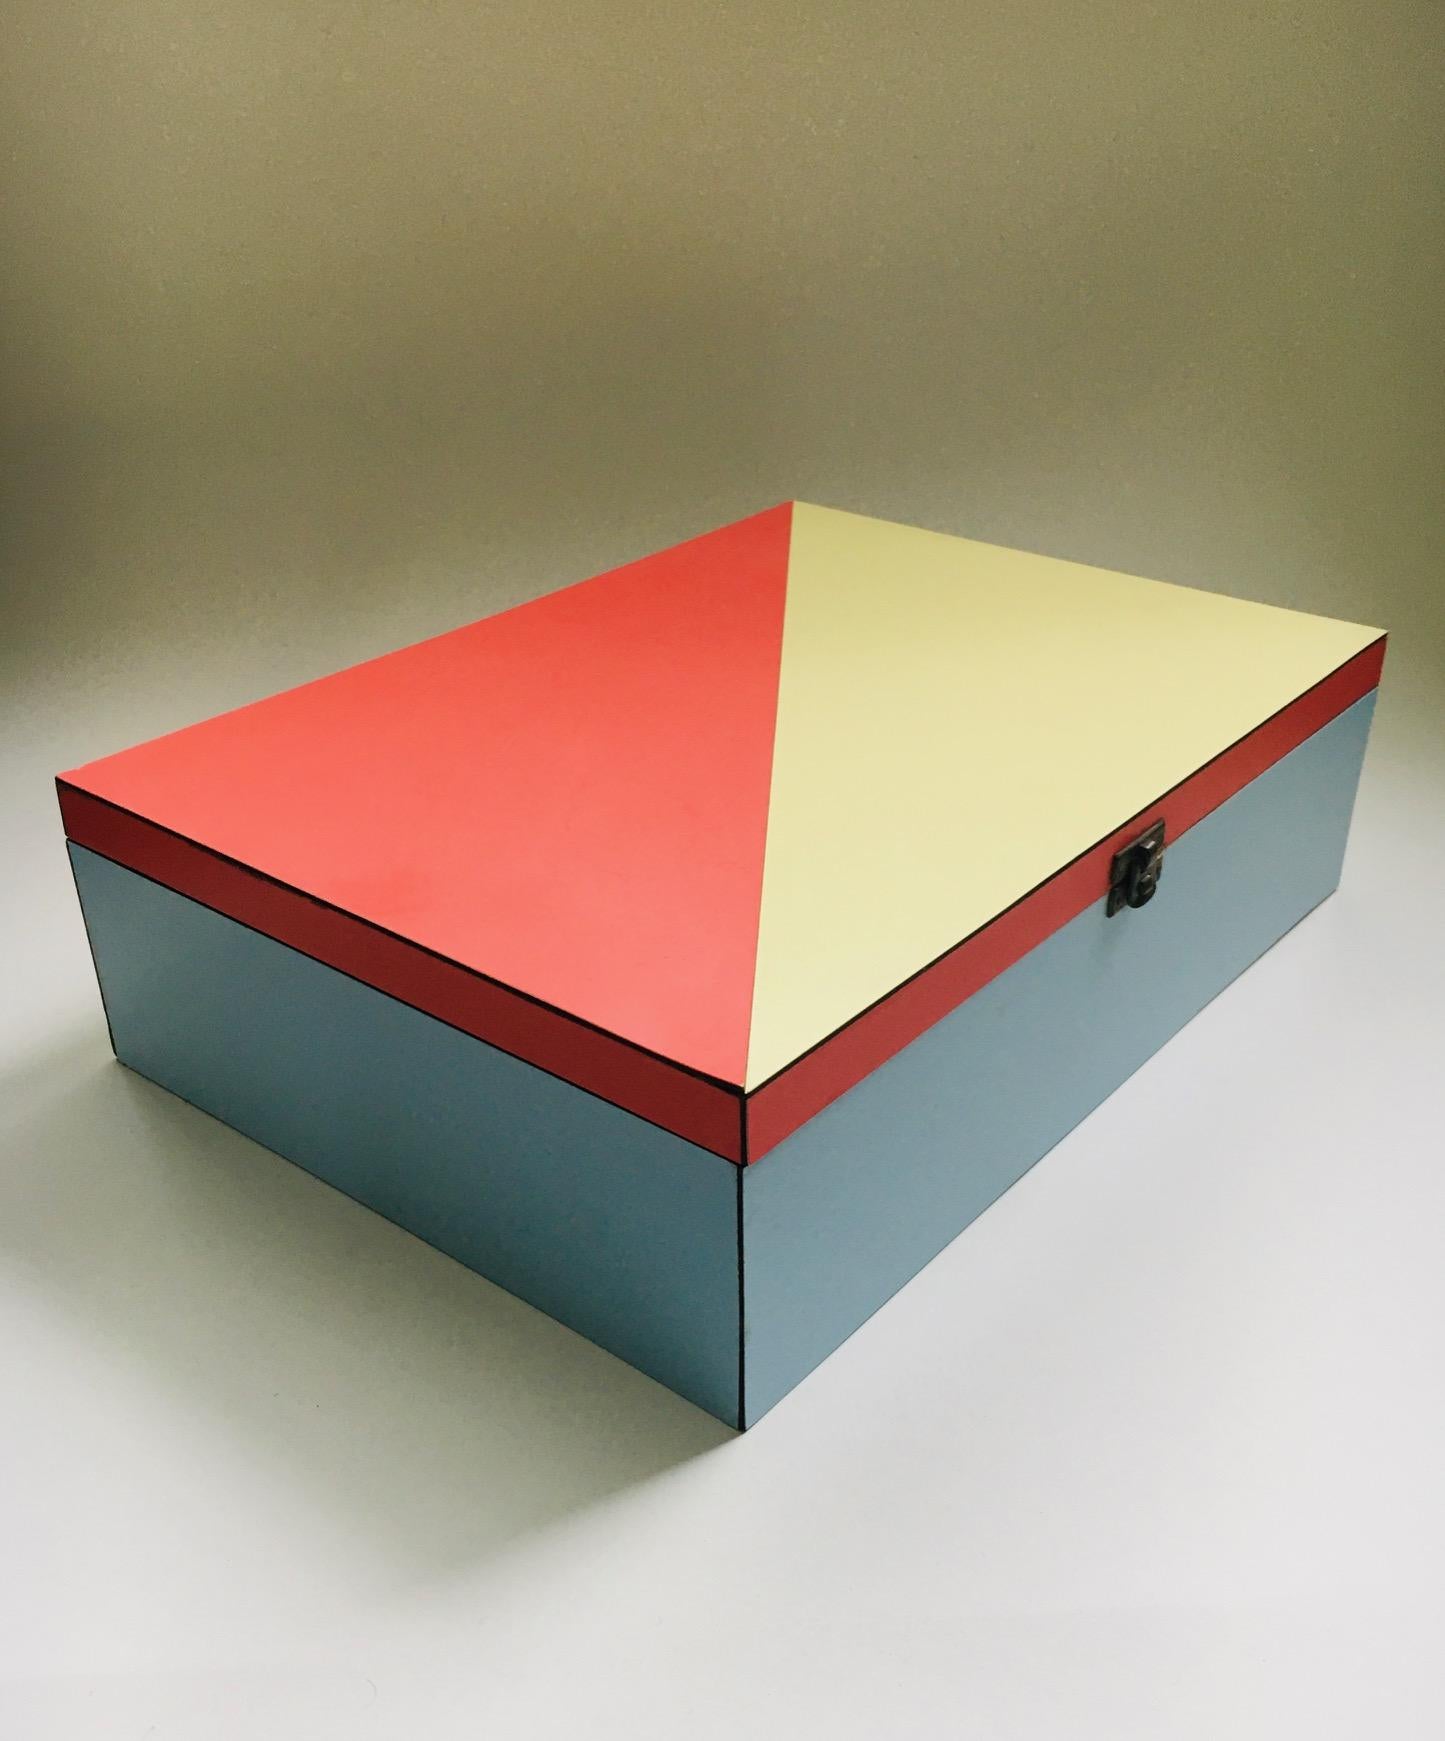 Midcentury Modern Dutch Design STIJL Modernism Letter Box, 1950's Holland For Sale 6